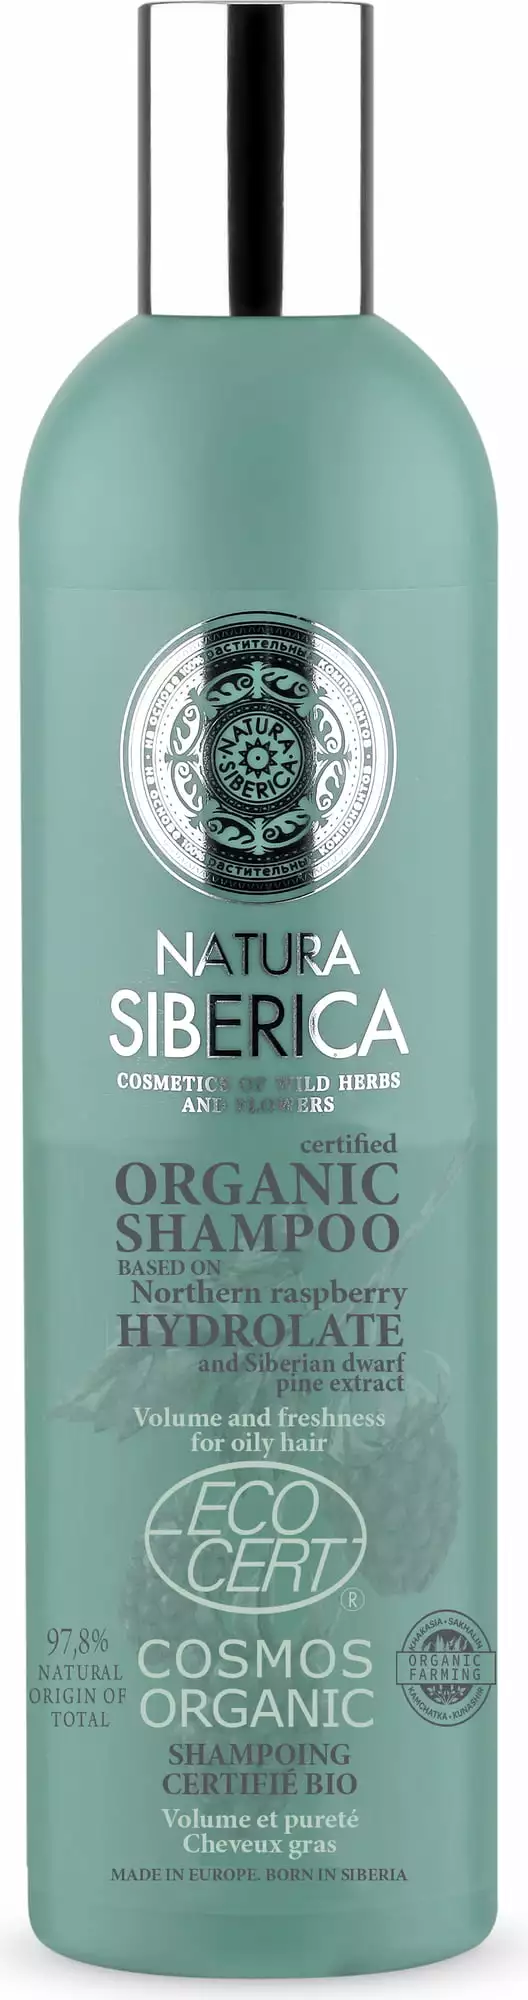 blog natura siberica szampon nadajacy objetosc